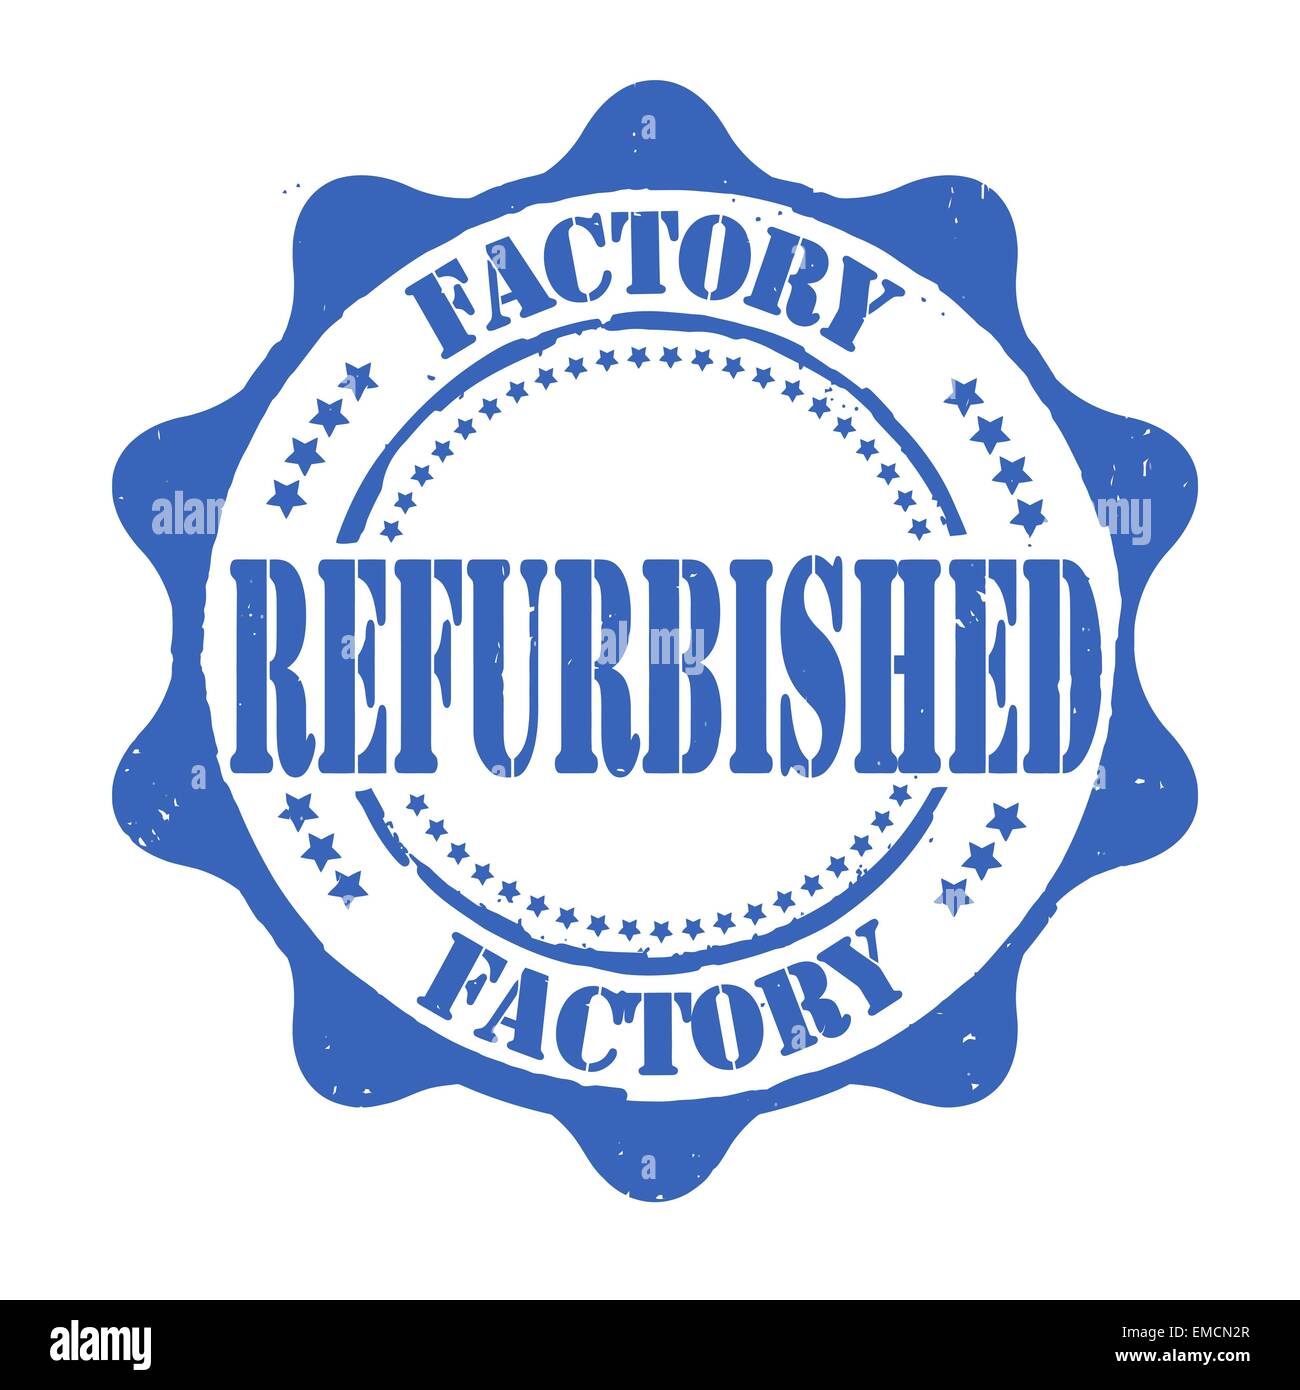 Factory refurbished stamp Stock Vector